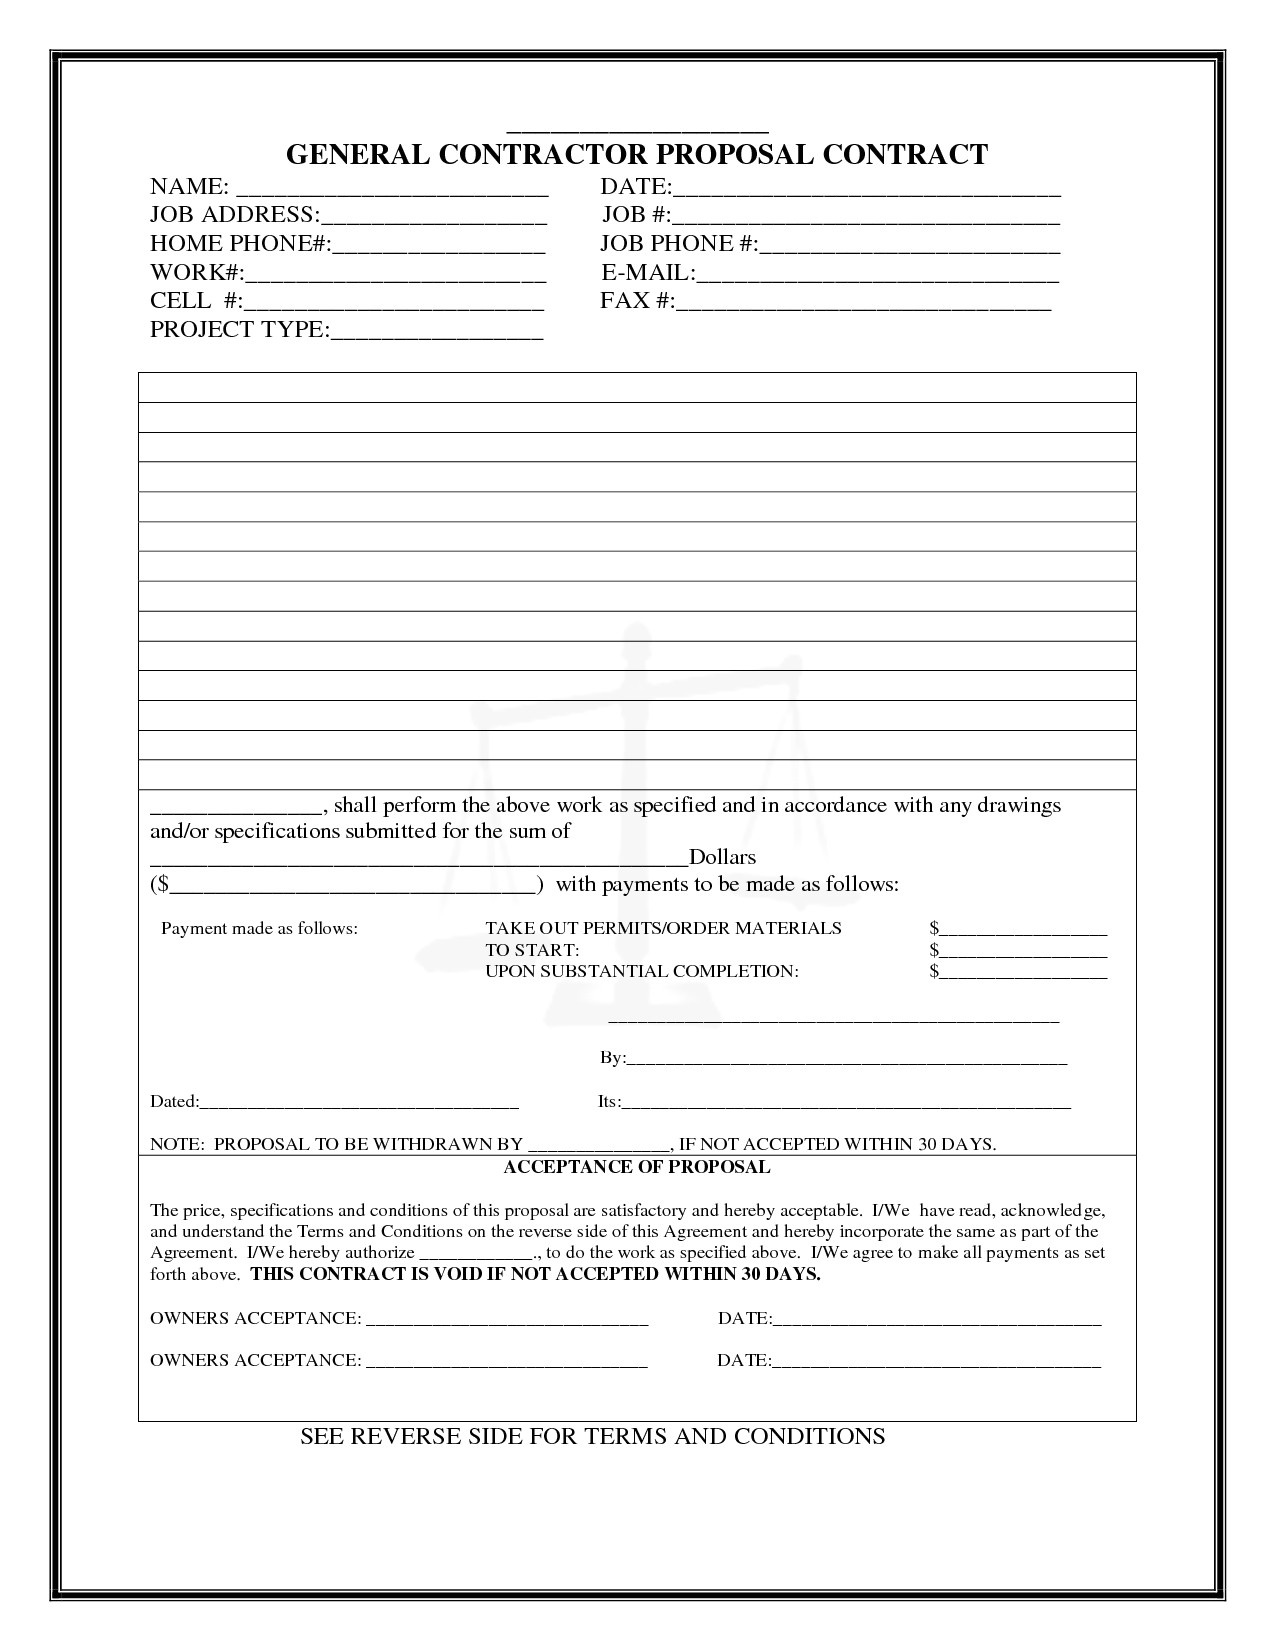 post contractor job proposal template 460033